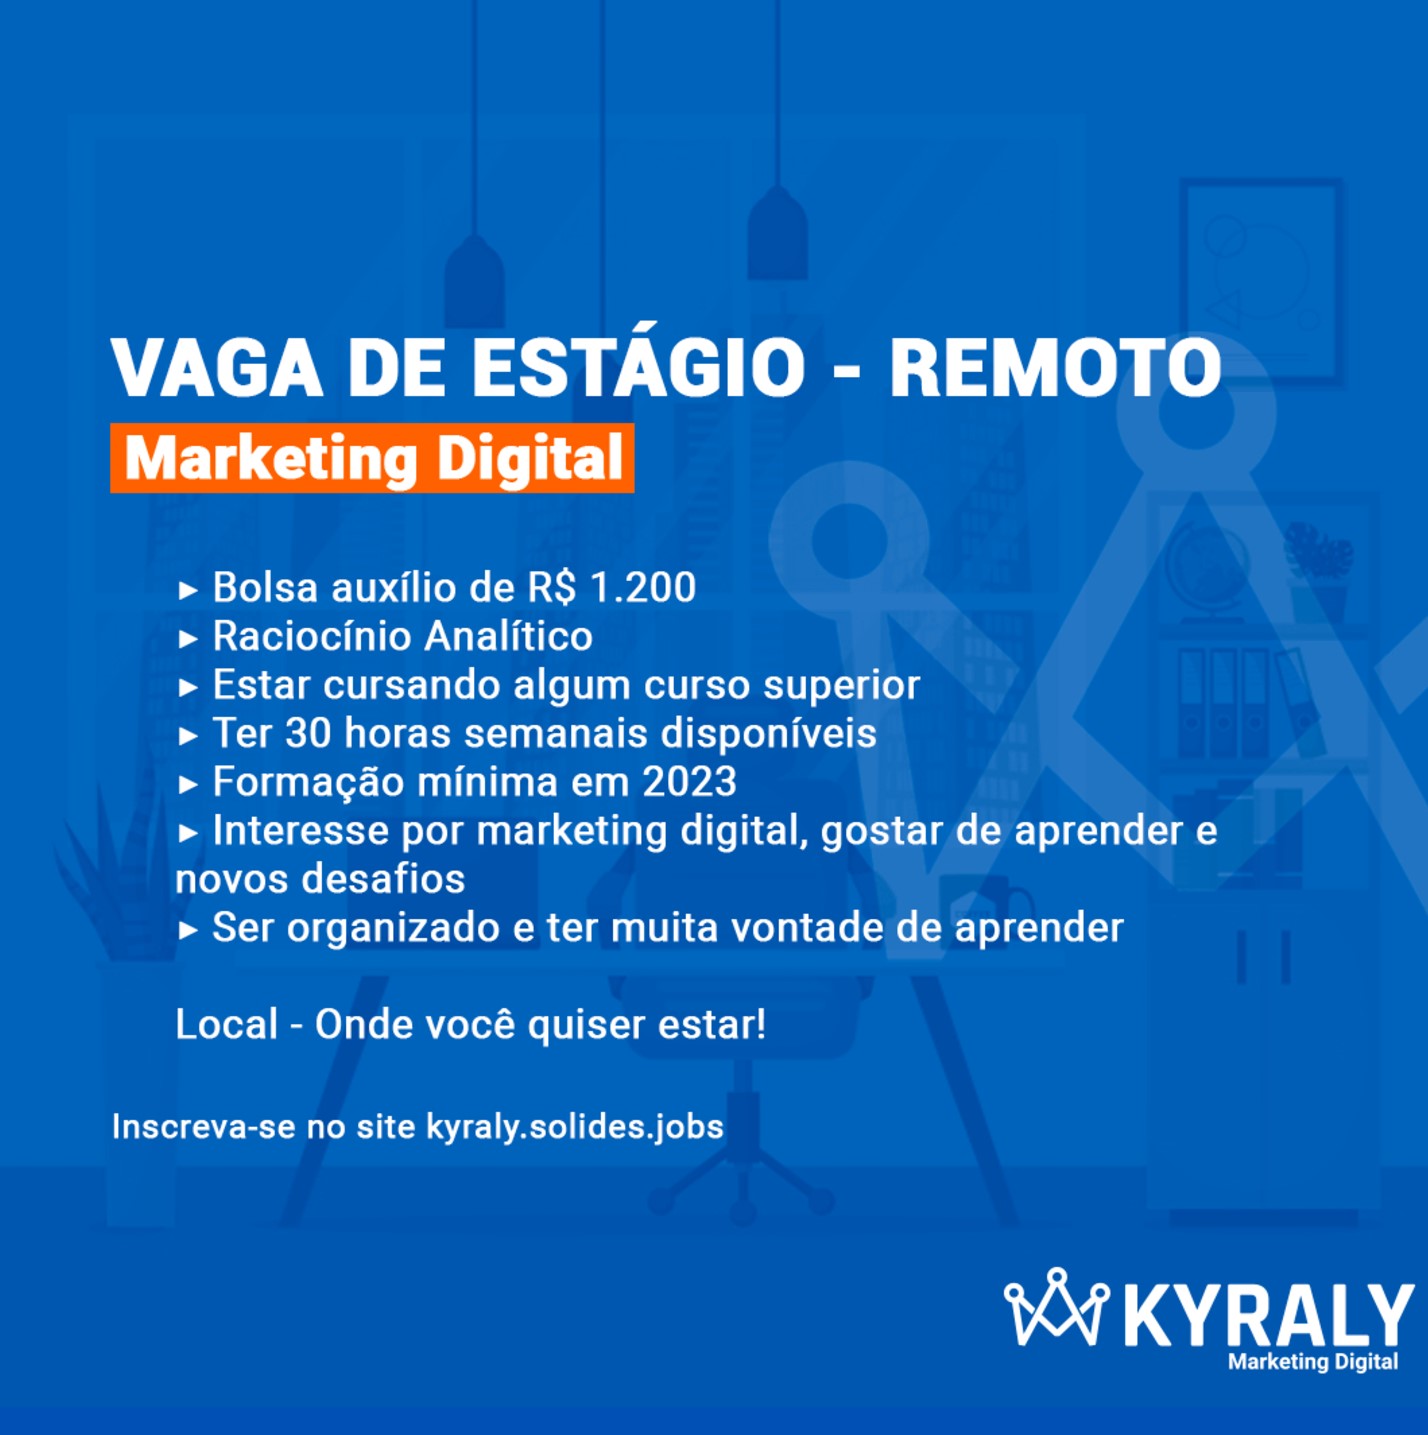 Kyraly-marketing-digital.jpg